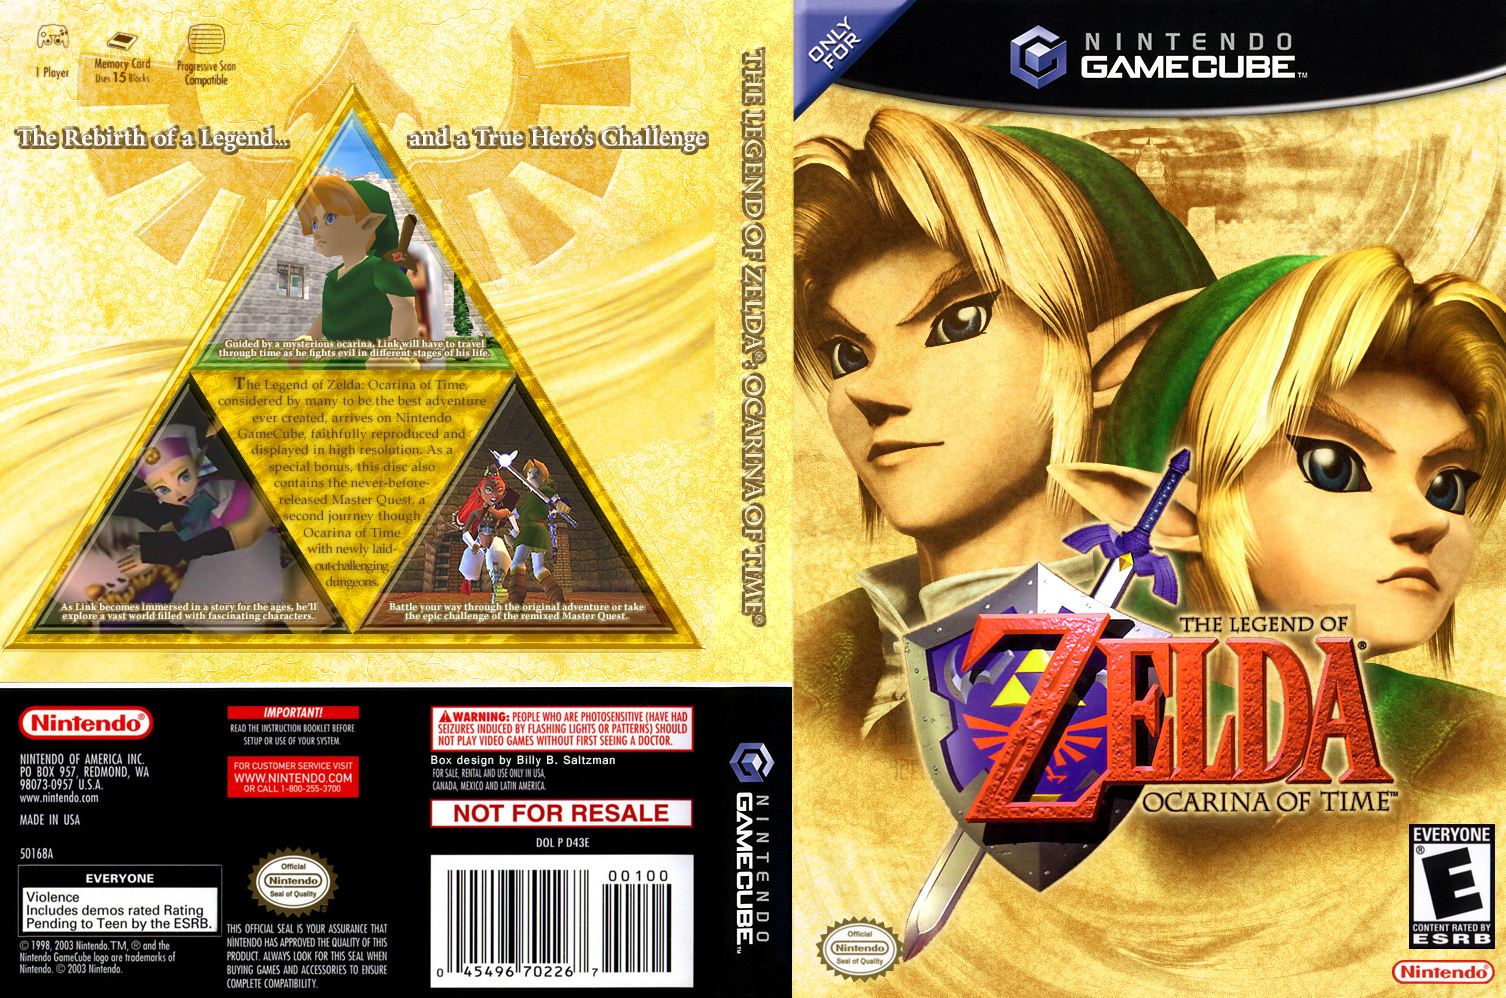 The Legend of Zelda: Ocarina of Time PC DVD Front by skysoul25 on DeviantArt